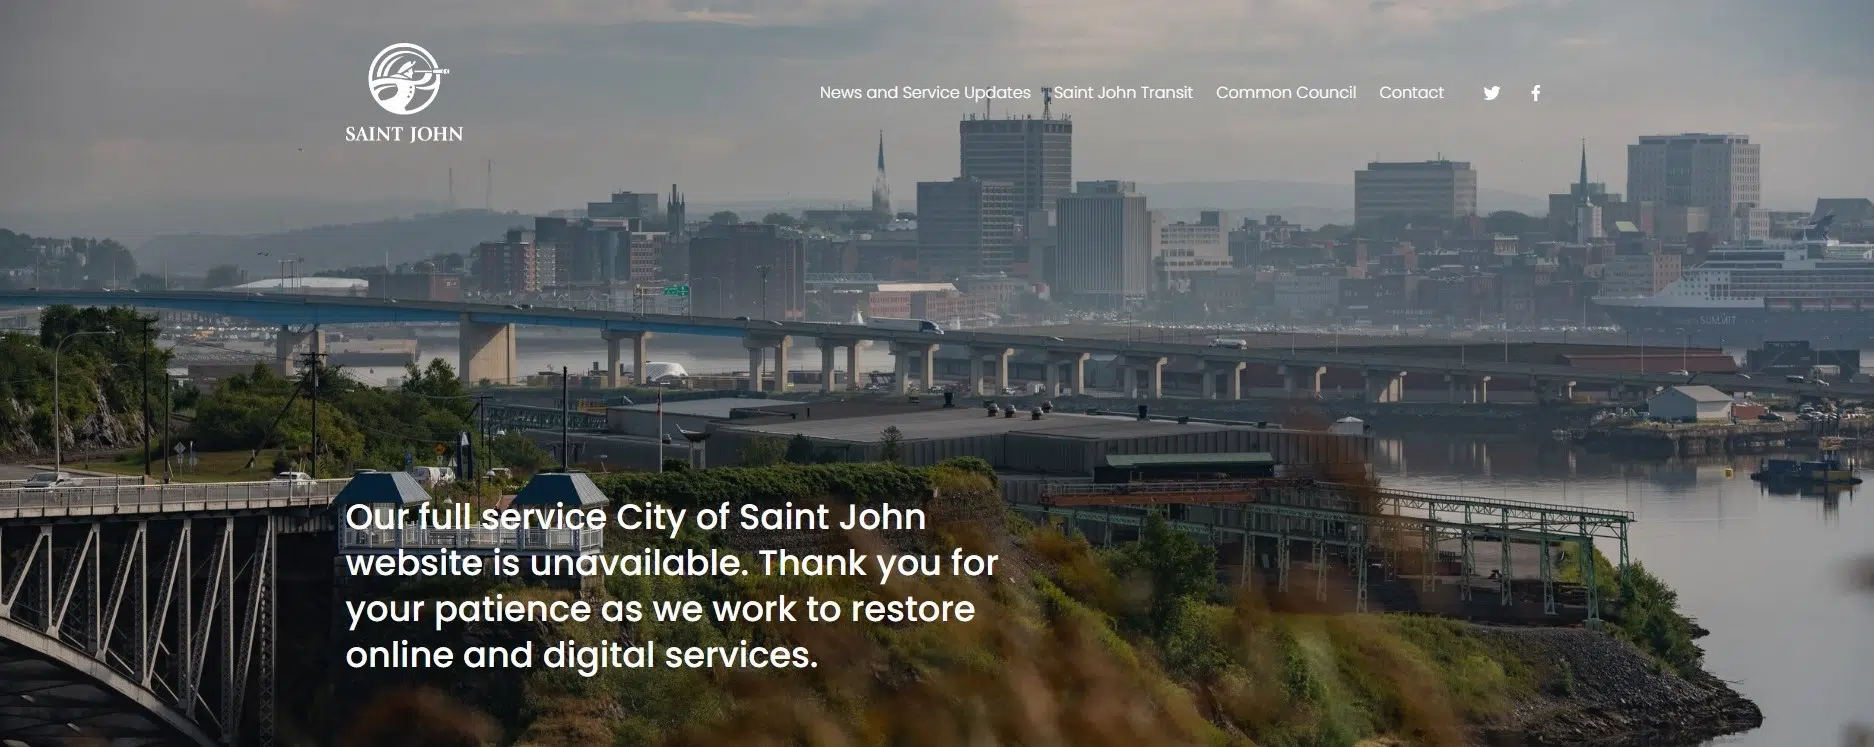 Saint John Launches New Website Amid Cyberattack